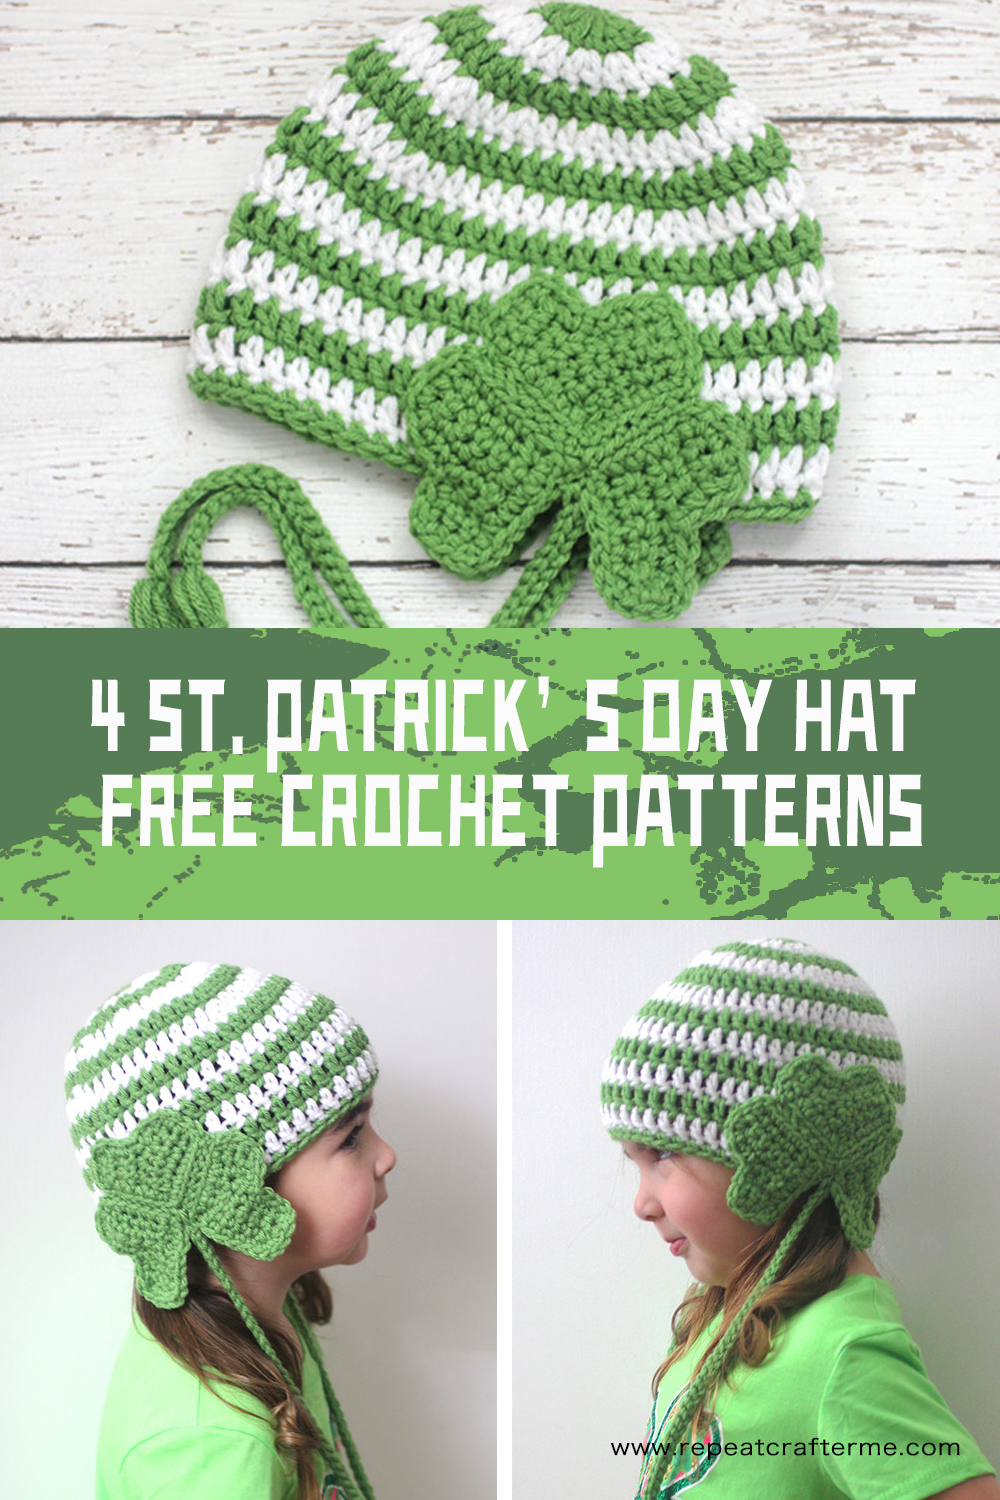 St. Patrick’s Day Crochet Hat Patterns FREE